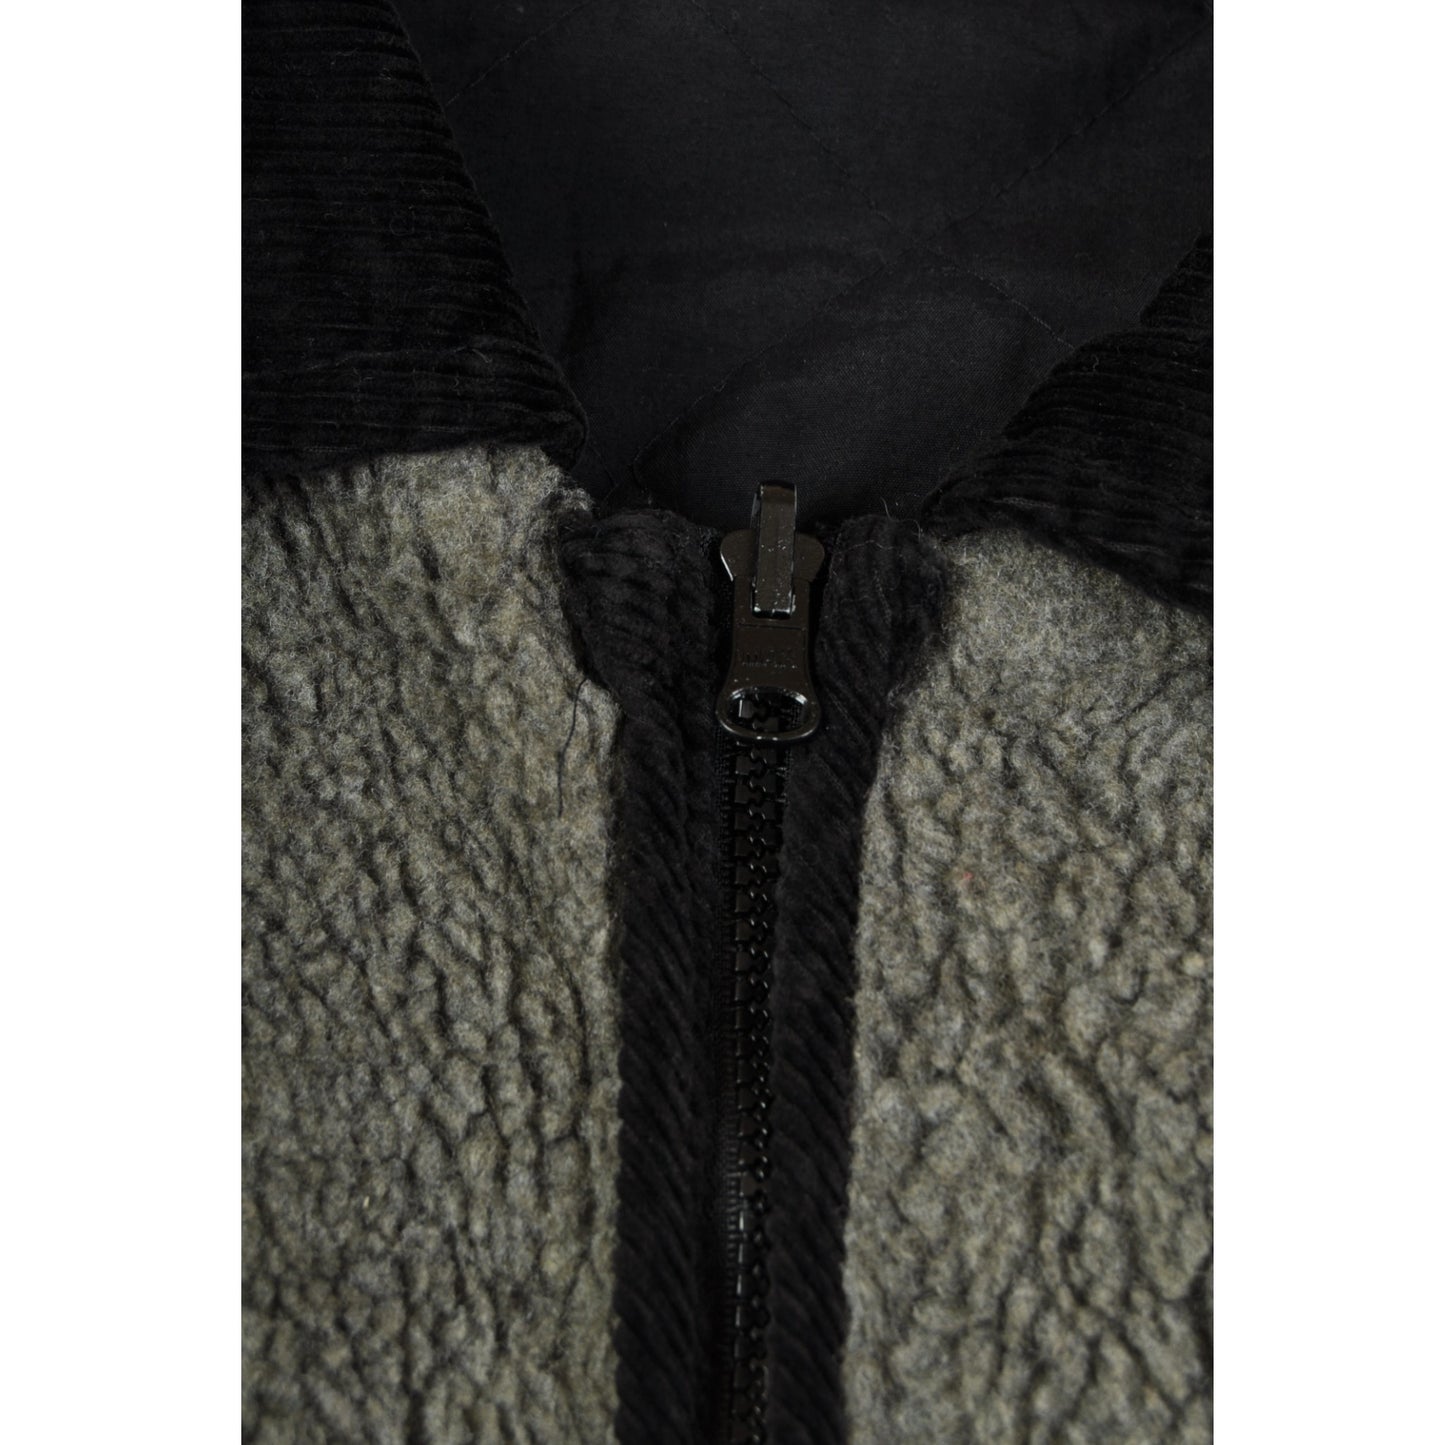 Vintage Fleece Jacket Retro Pattern Grey XL